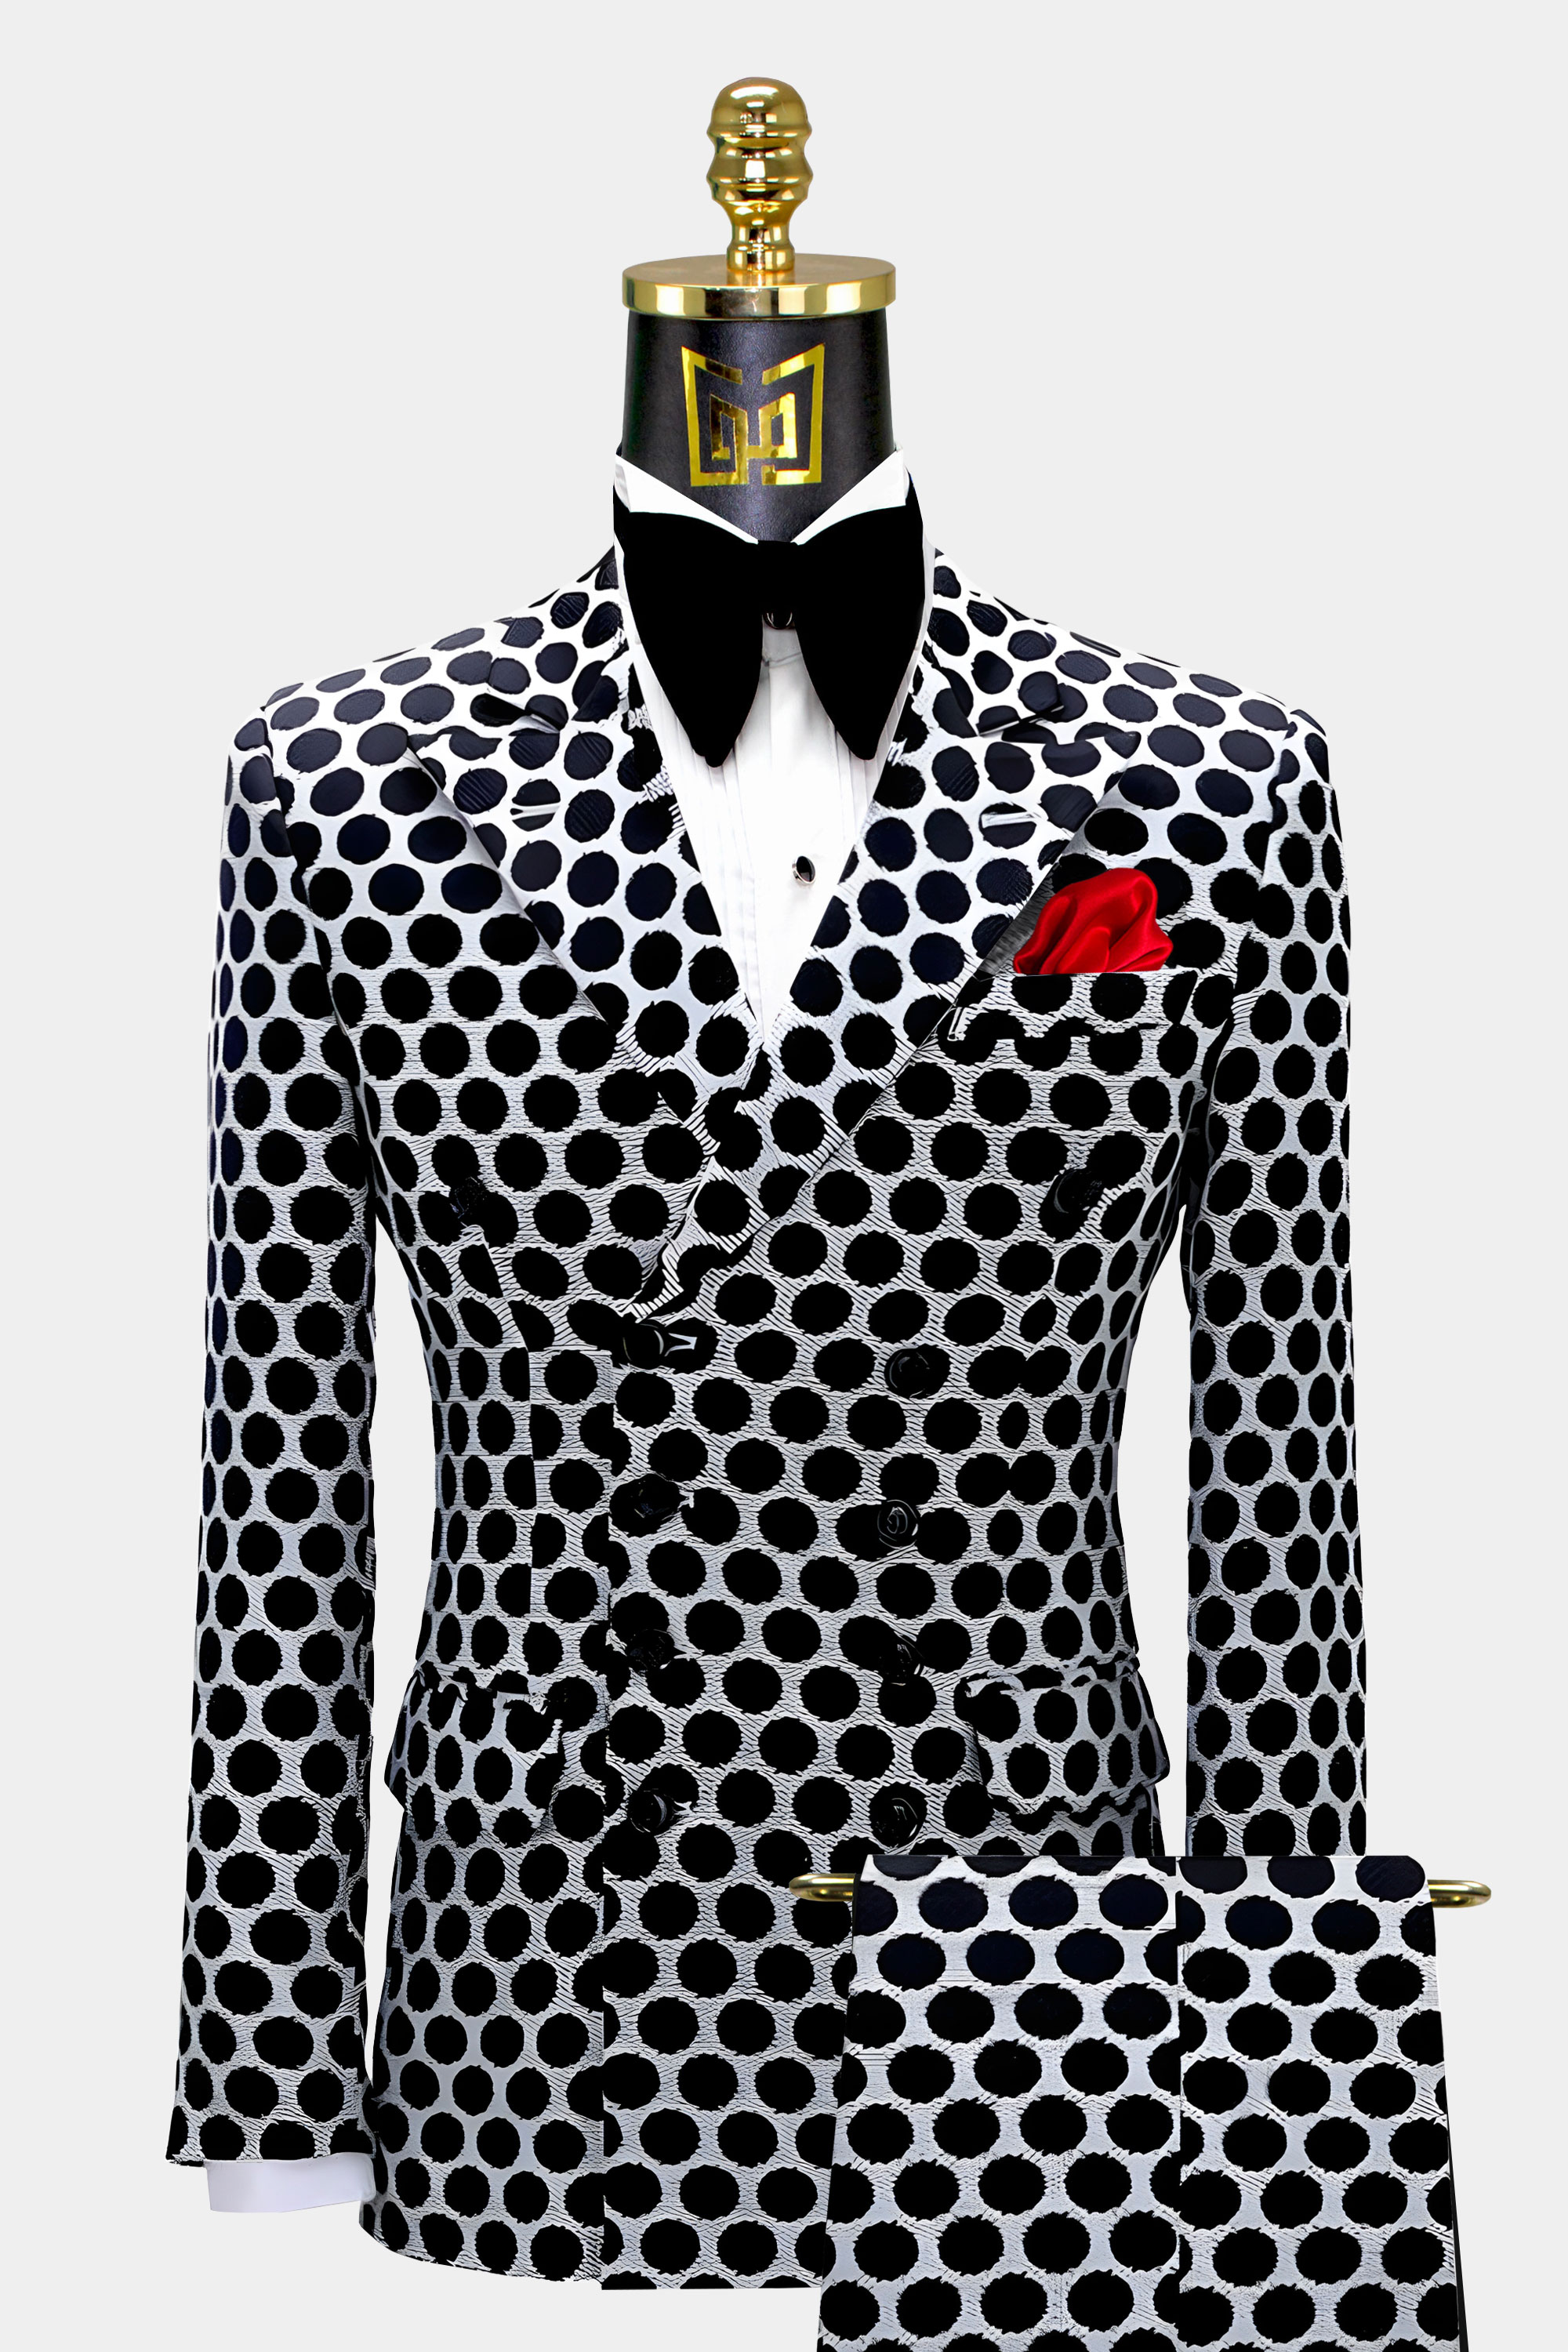 Black and White Polka Dot Suit | Gentleman's Guru